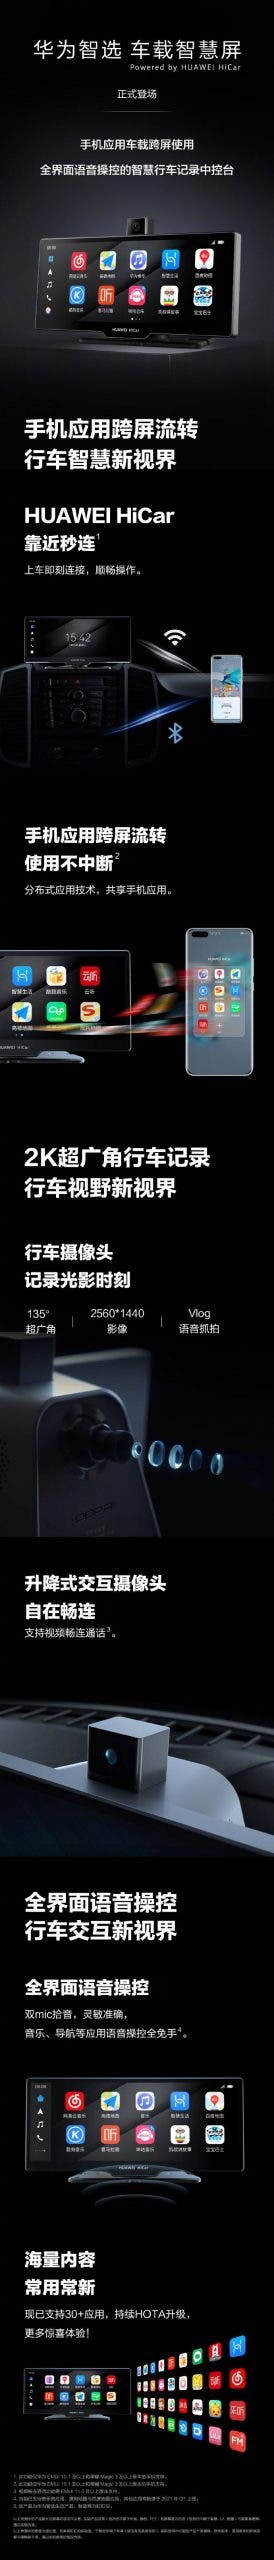 Écran Intelligent Embarqué Huawei 1.Jpg